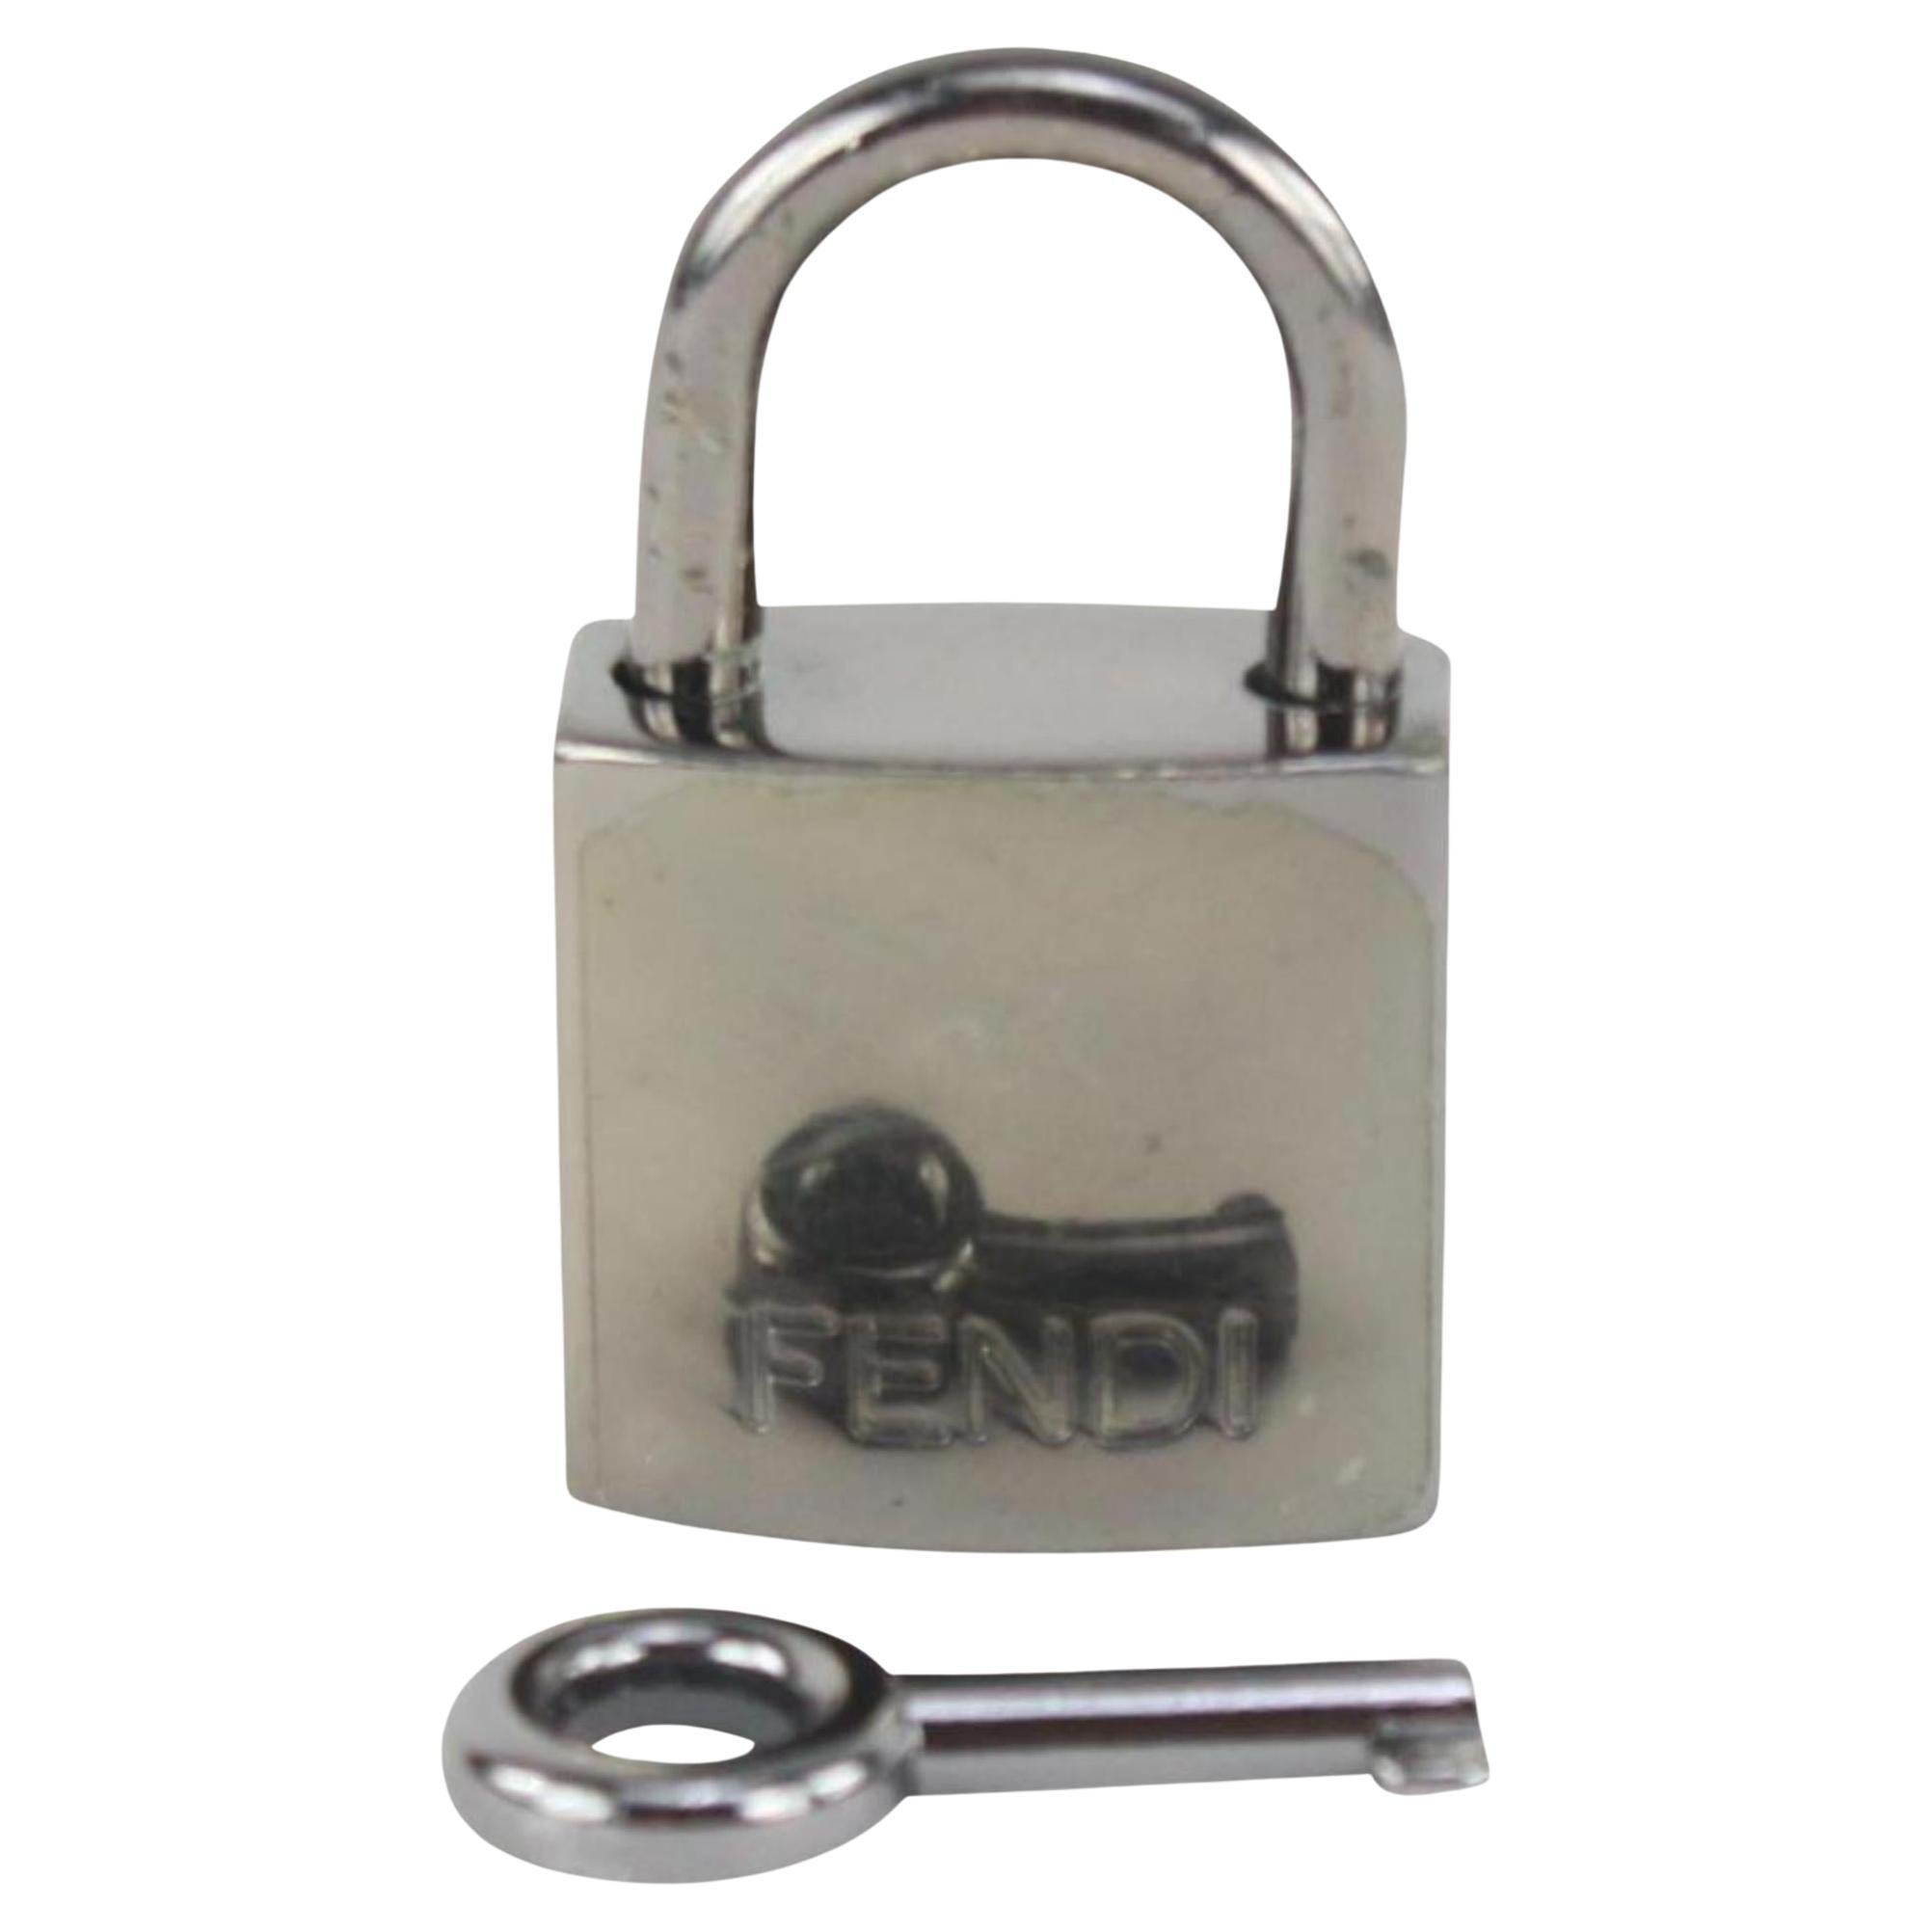 Fendi FF Logo Padlock and Key Lock Set Bag Charm 126f48